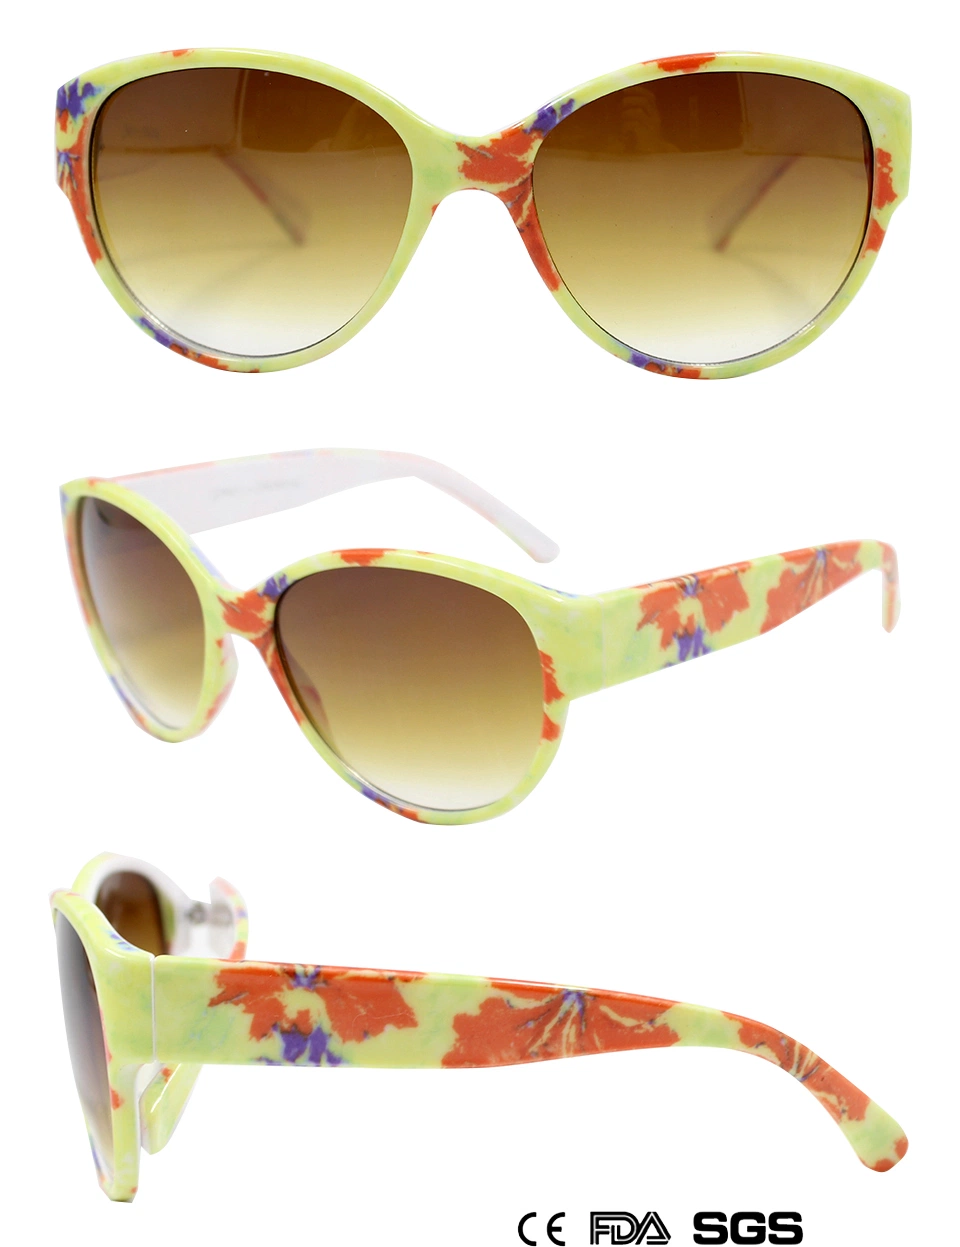 Lady's Cat-Eye Sunglasses with Pattern (M10811)